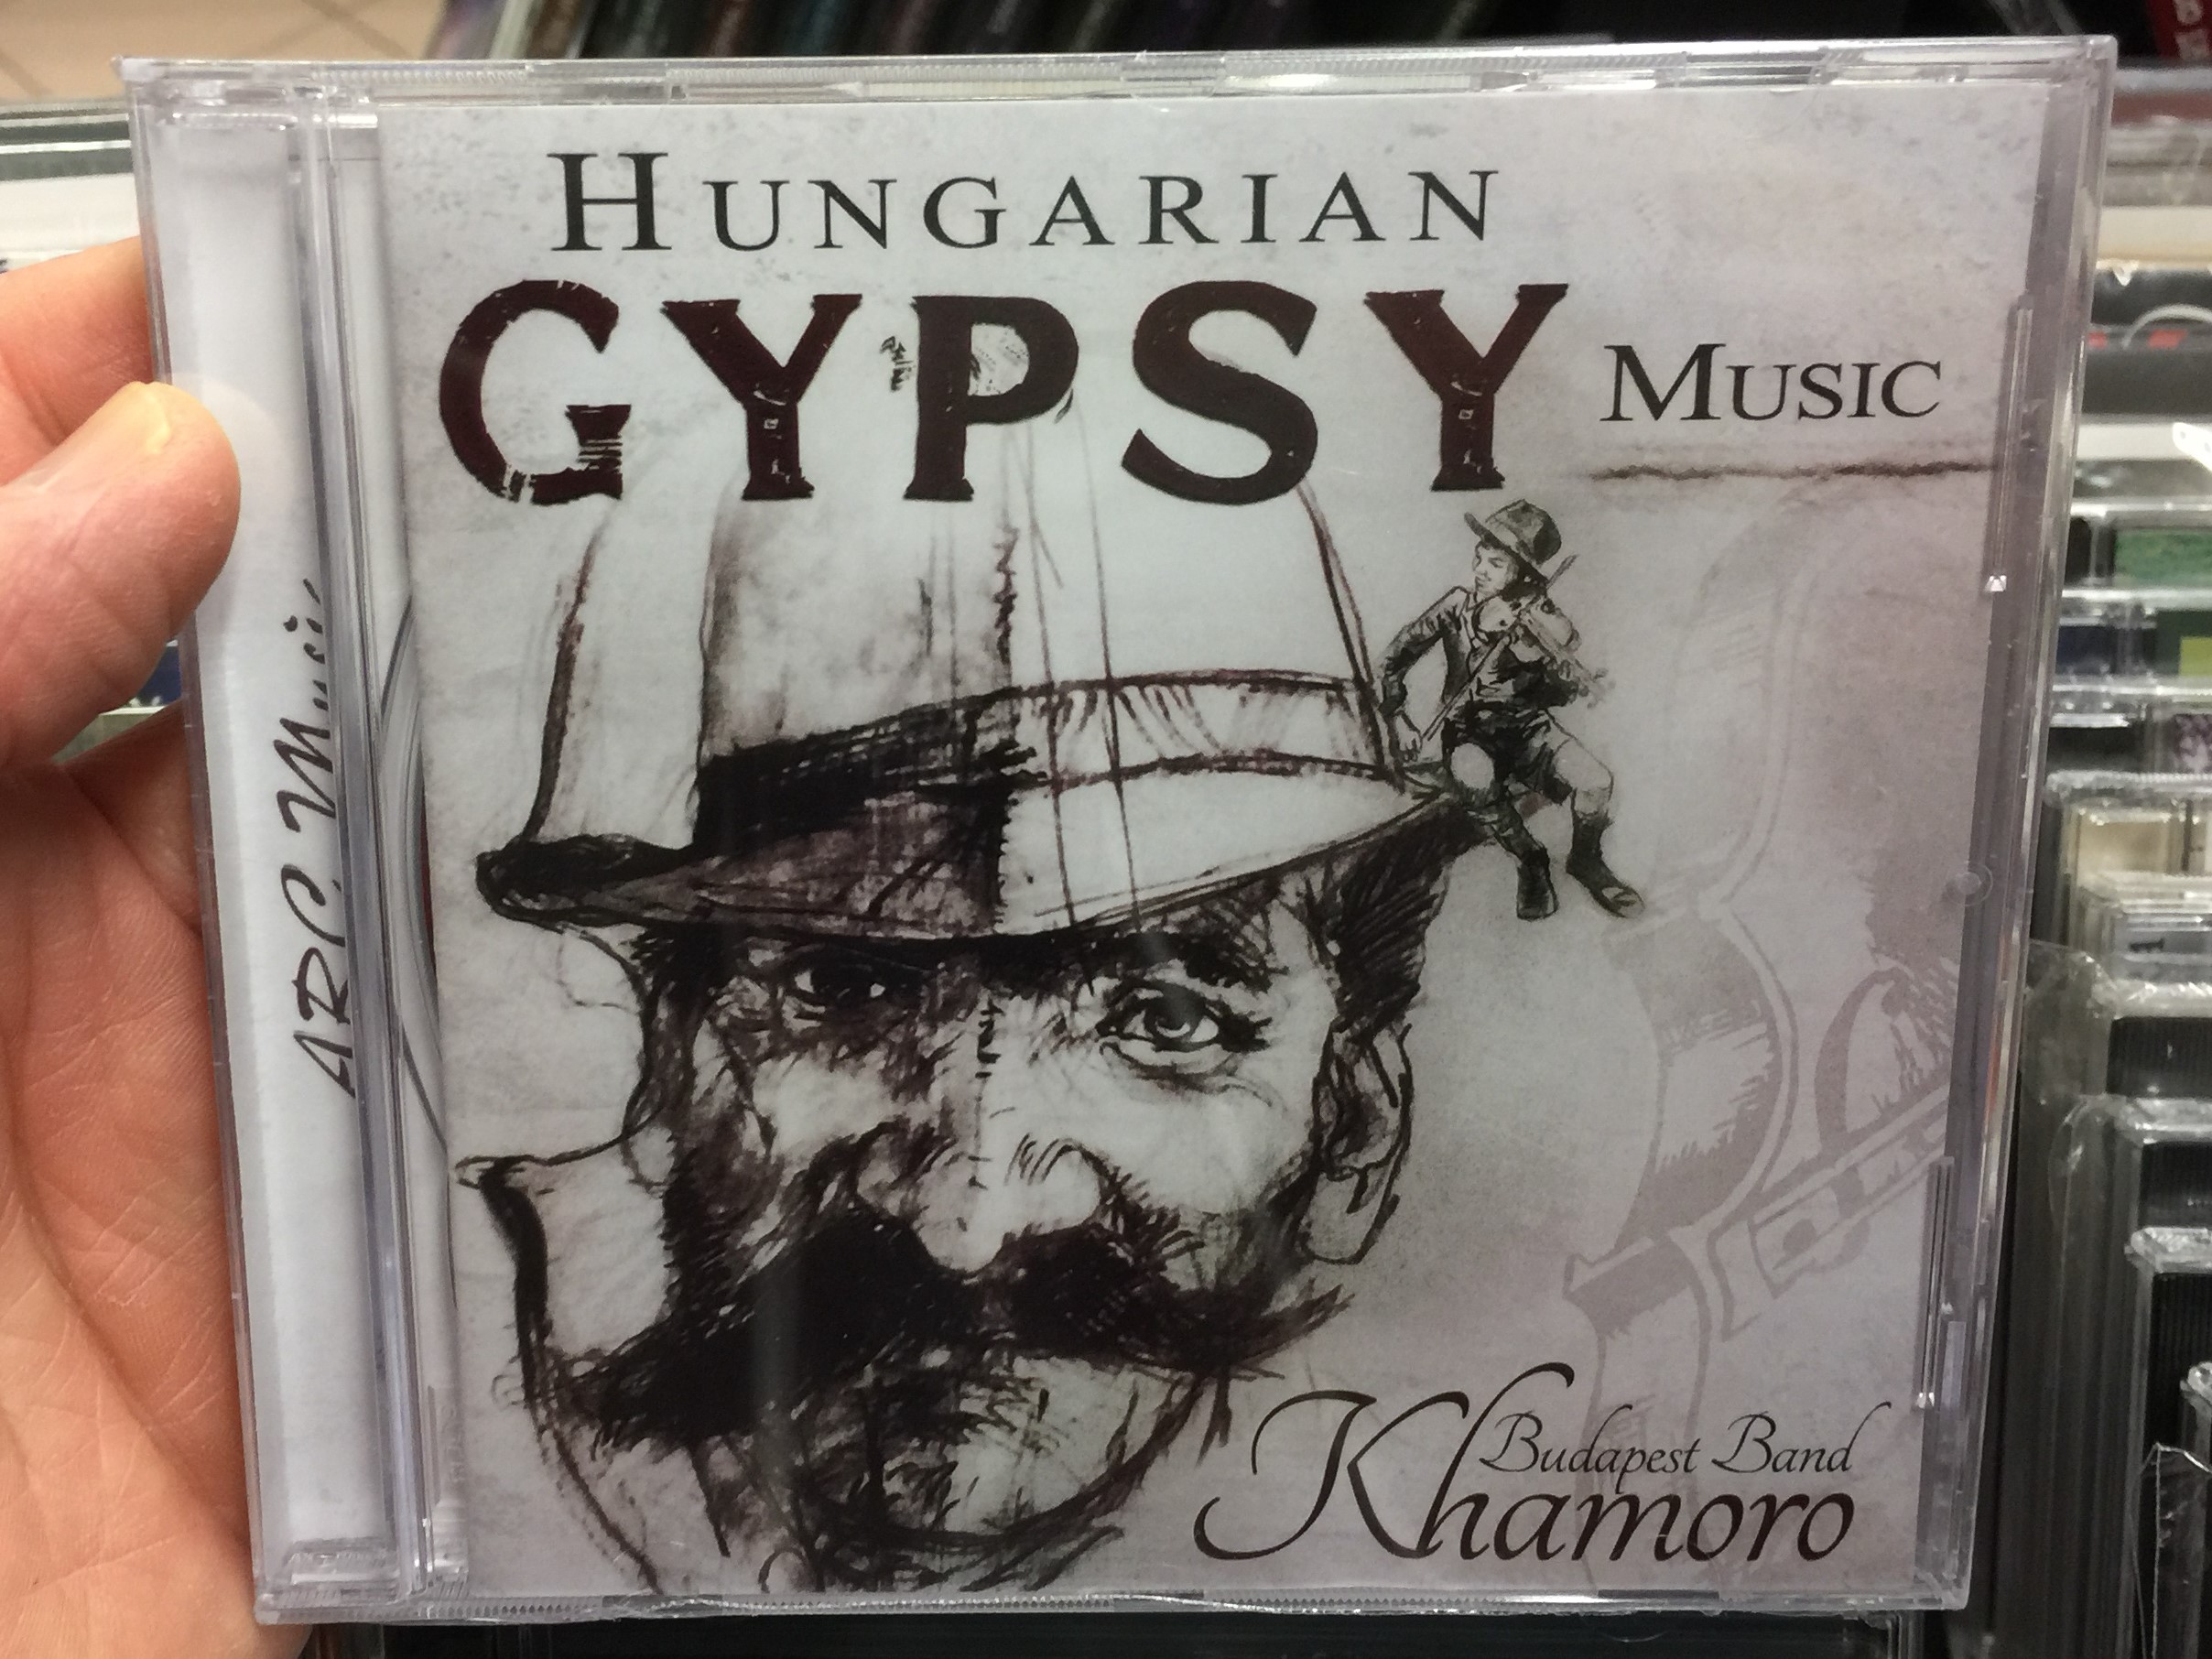 hungarian-gypsy-music-budapest-band-khamoro-arc-music-audio-cd-2017-eucd2708-1-.jpg